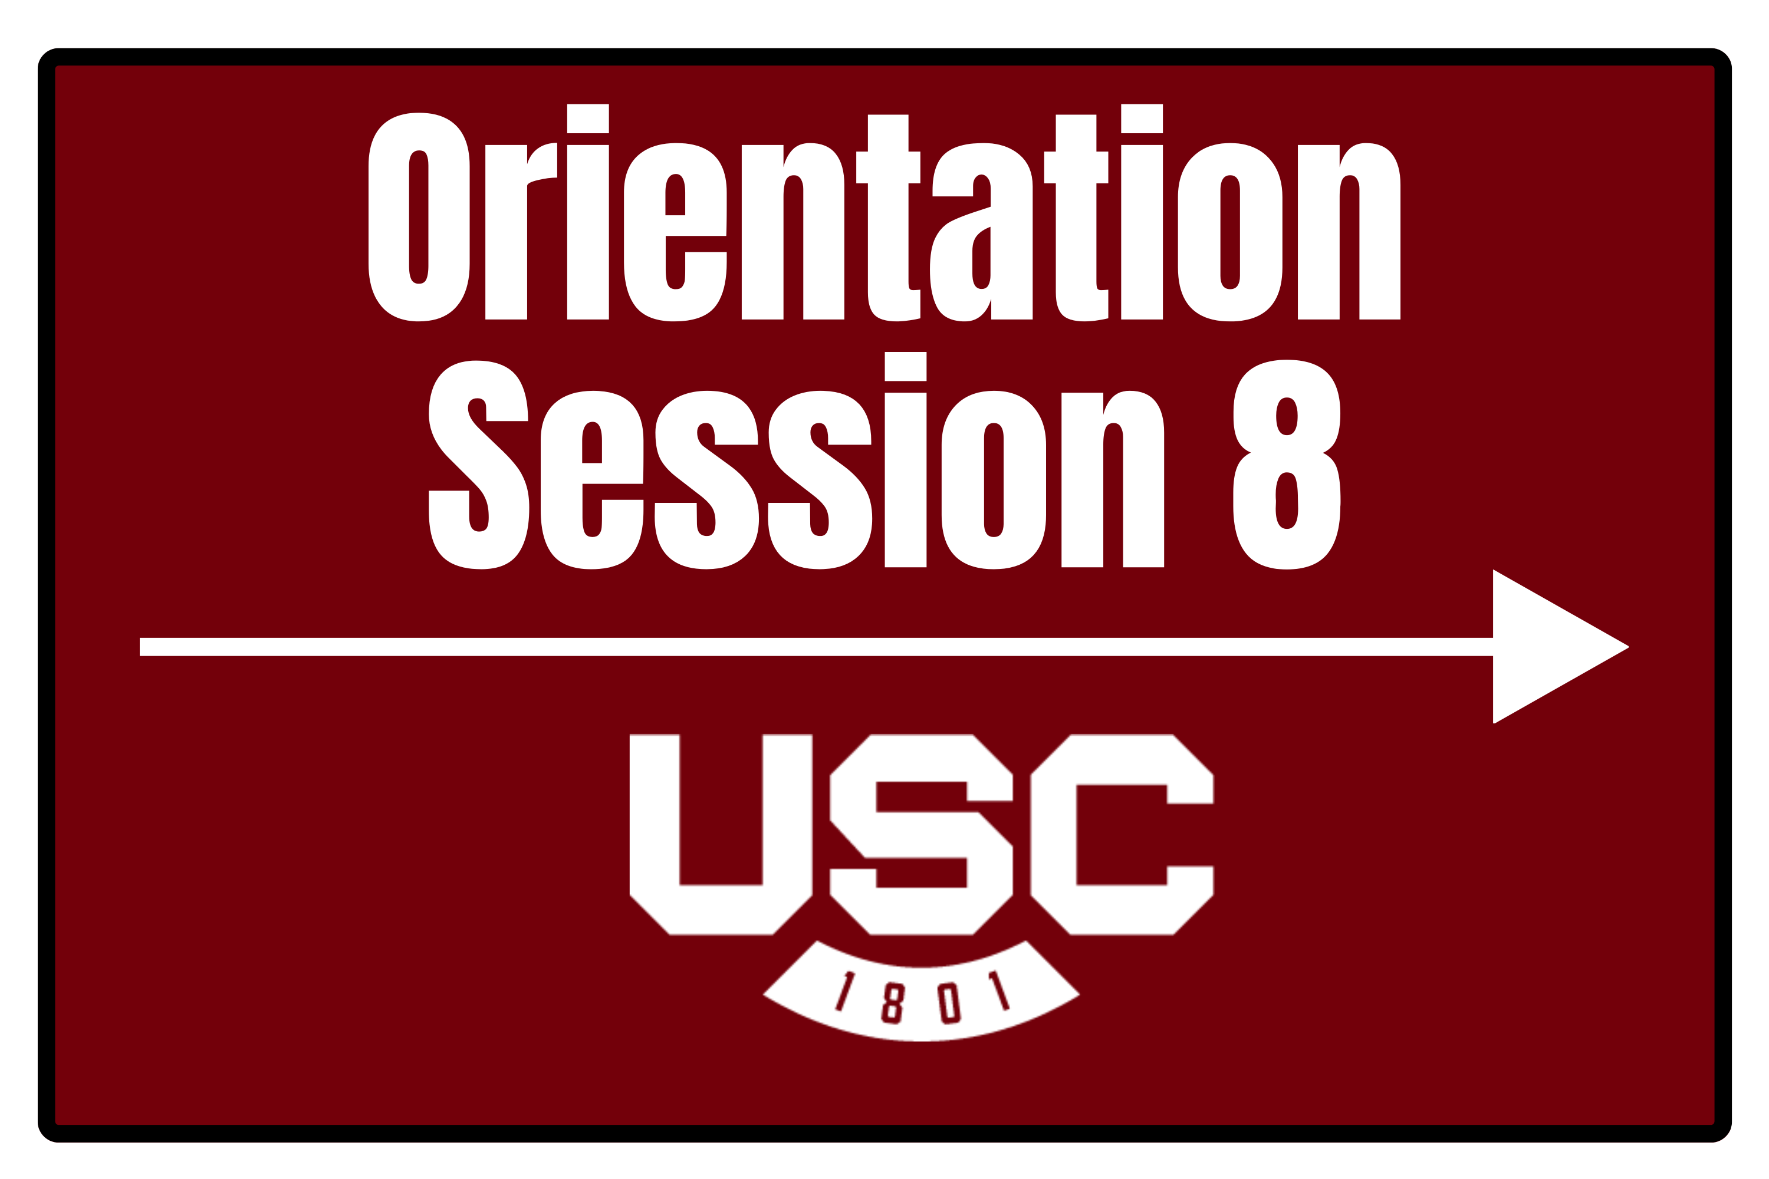 Orientation Session 8: June 20 - 21